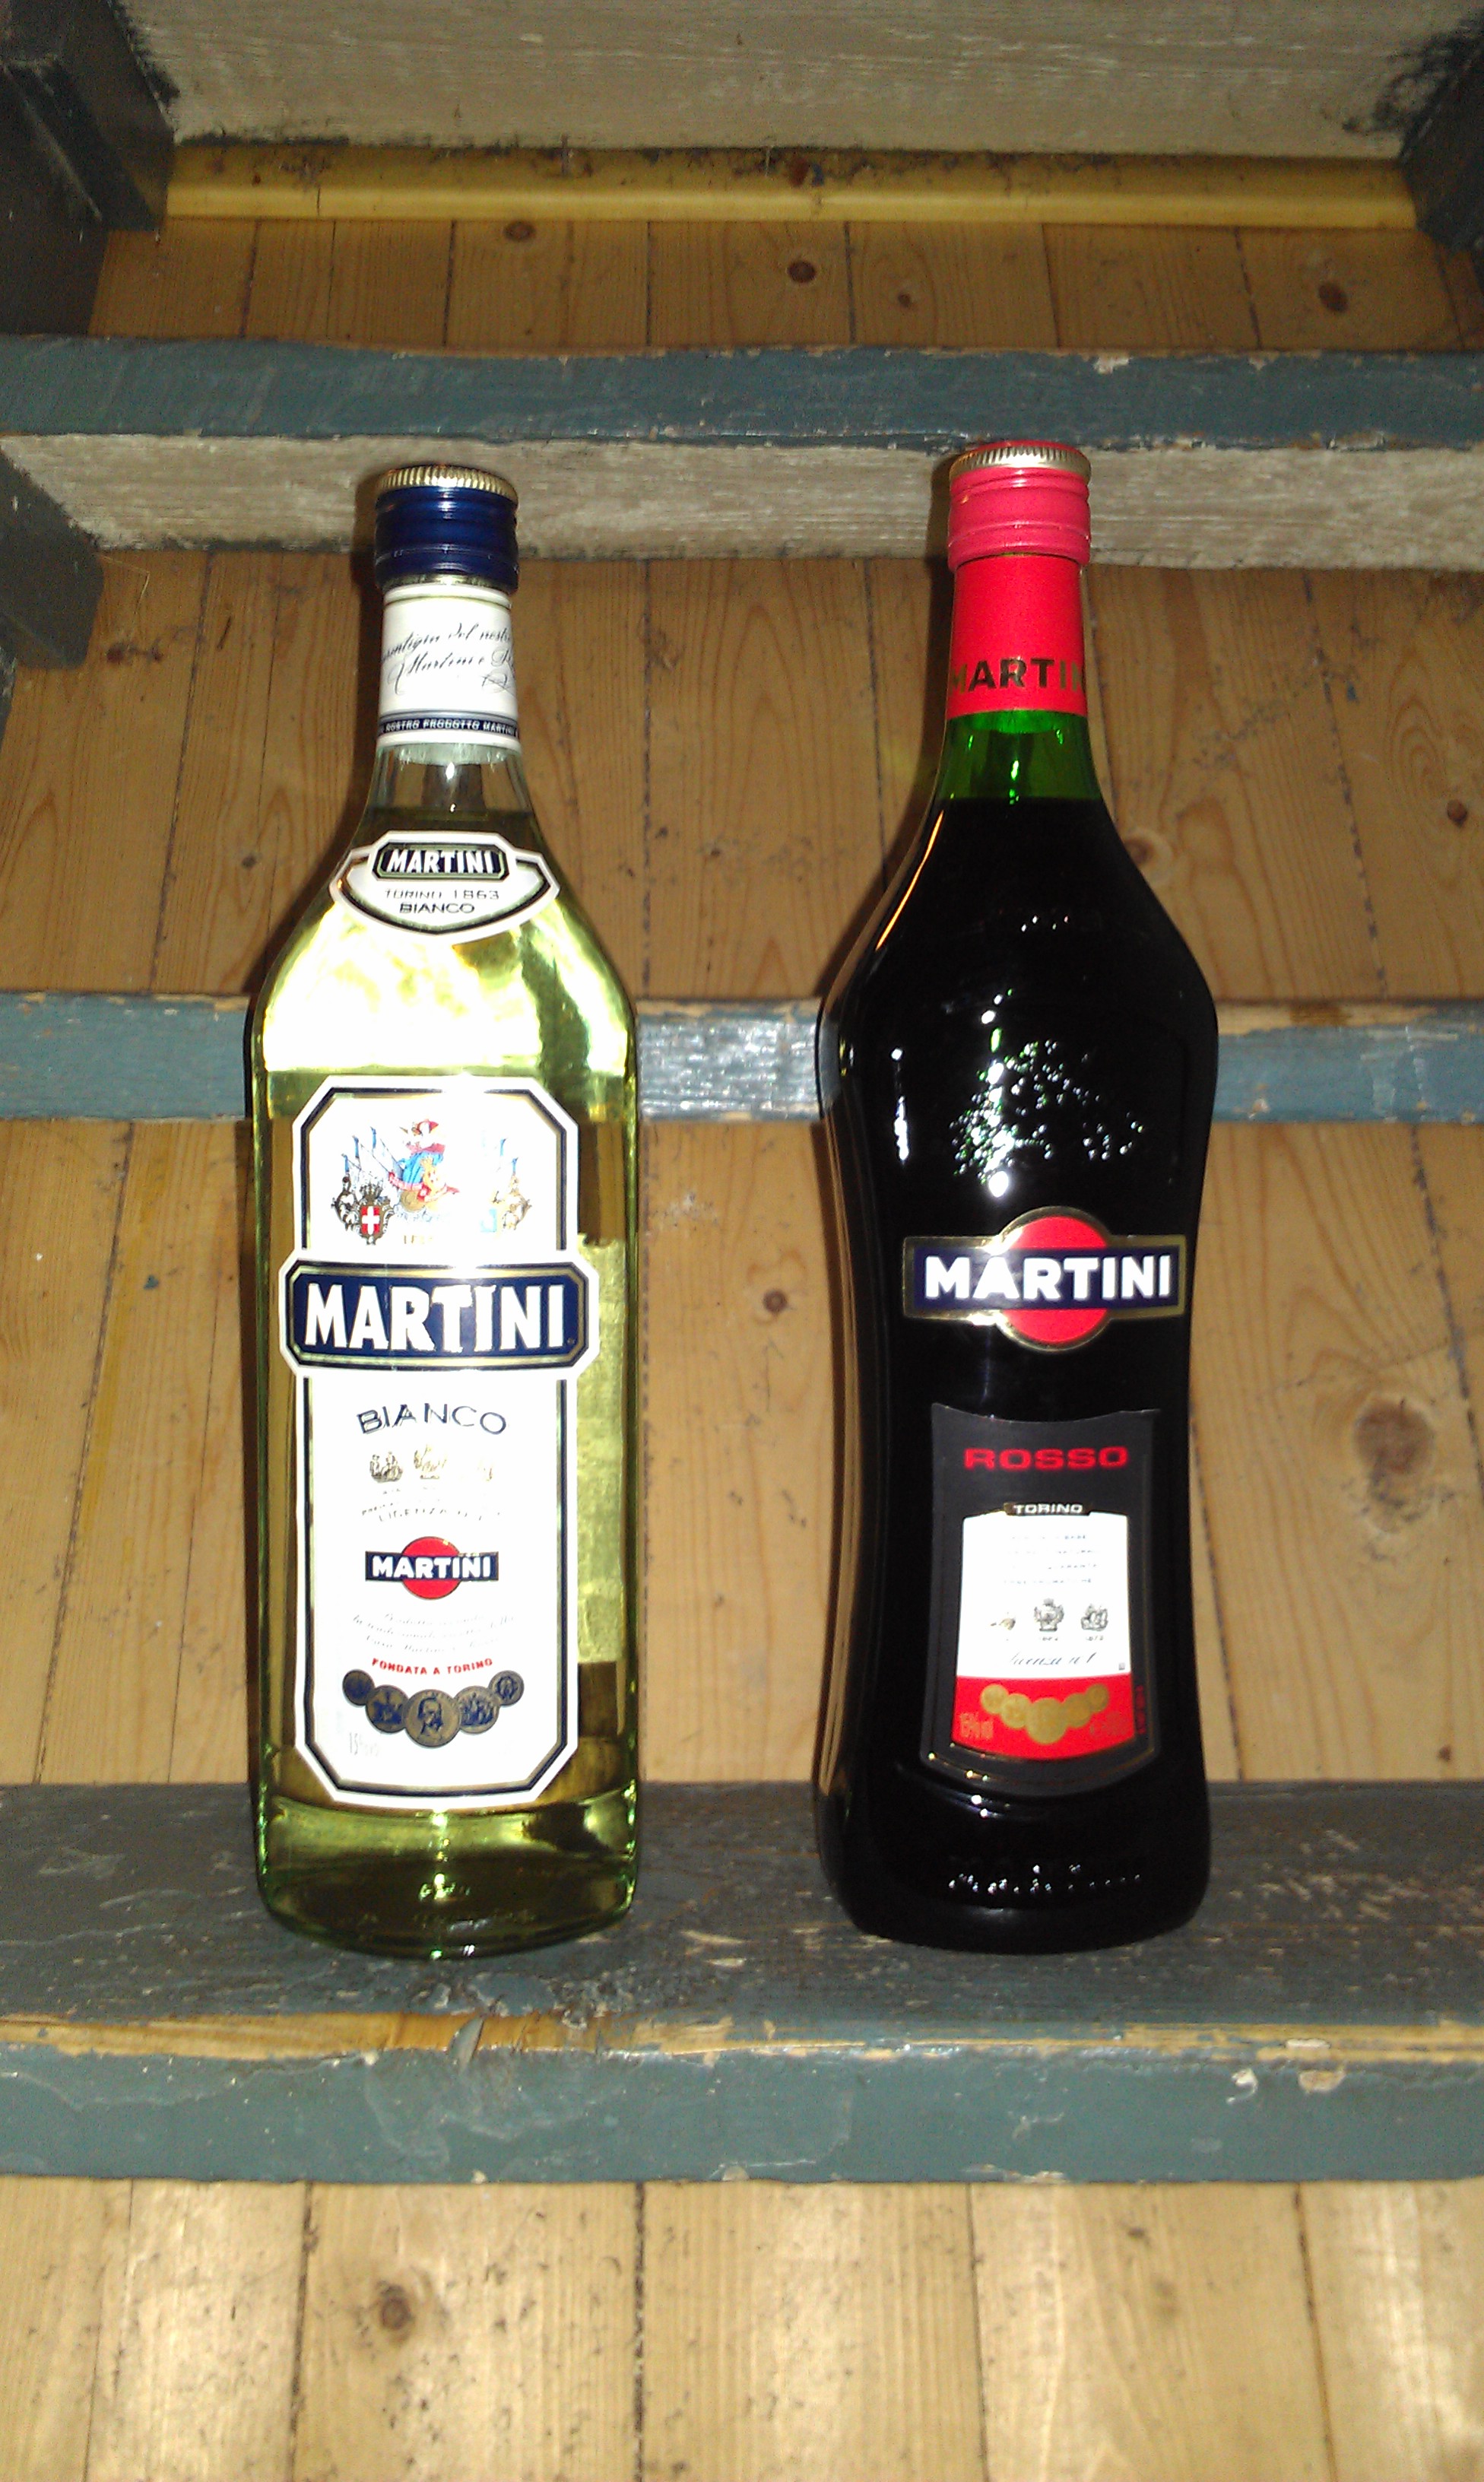 File:Martini.jpg Wikimedia